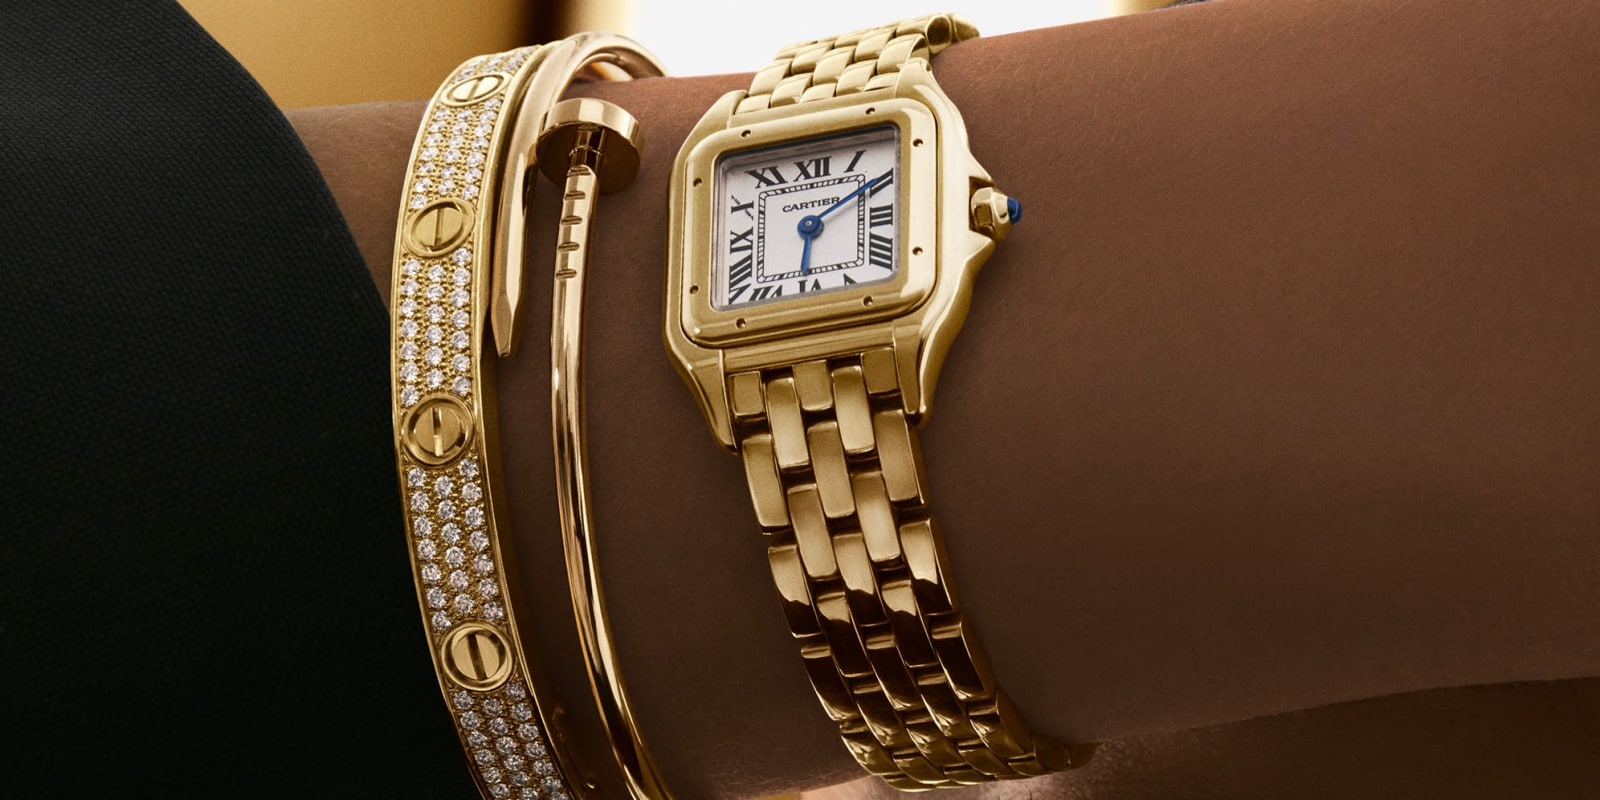 Cartier® Official Website - Jeweler and Watchmaker since 1847